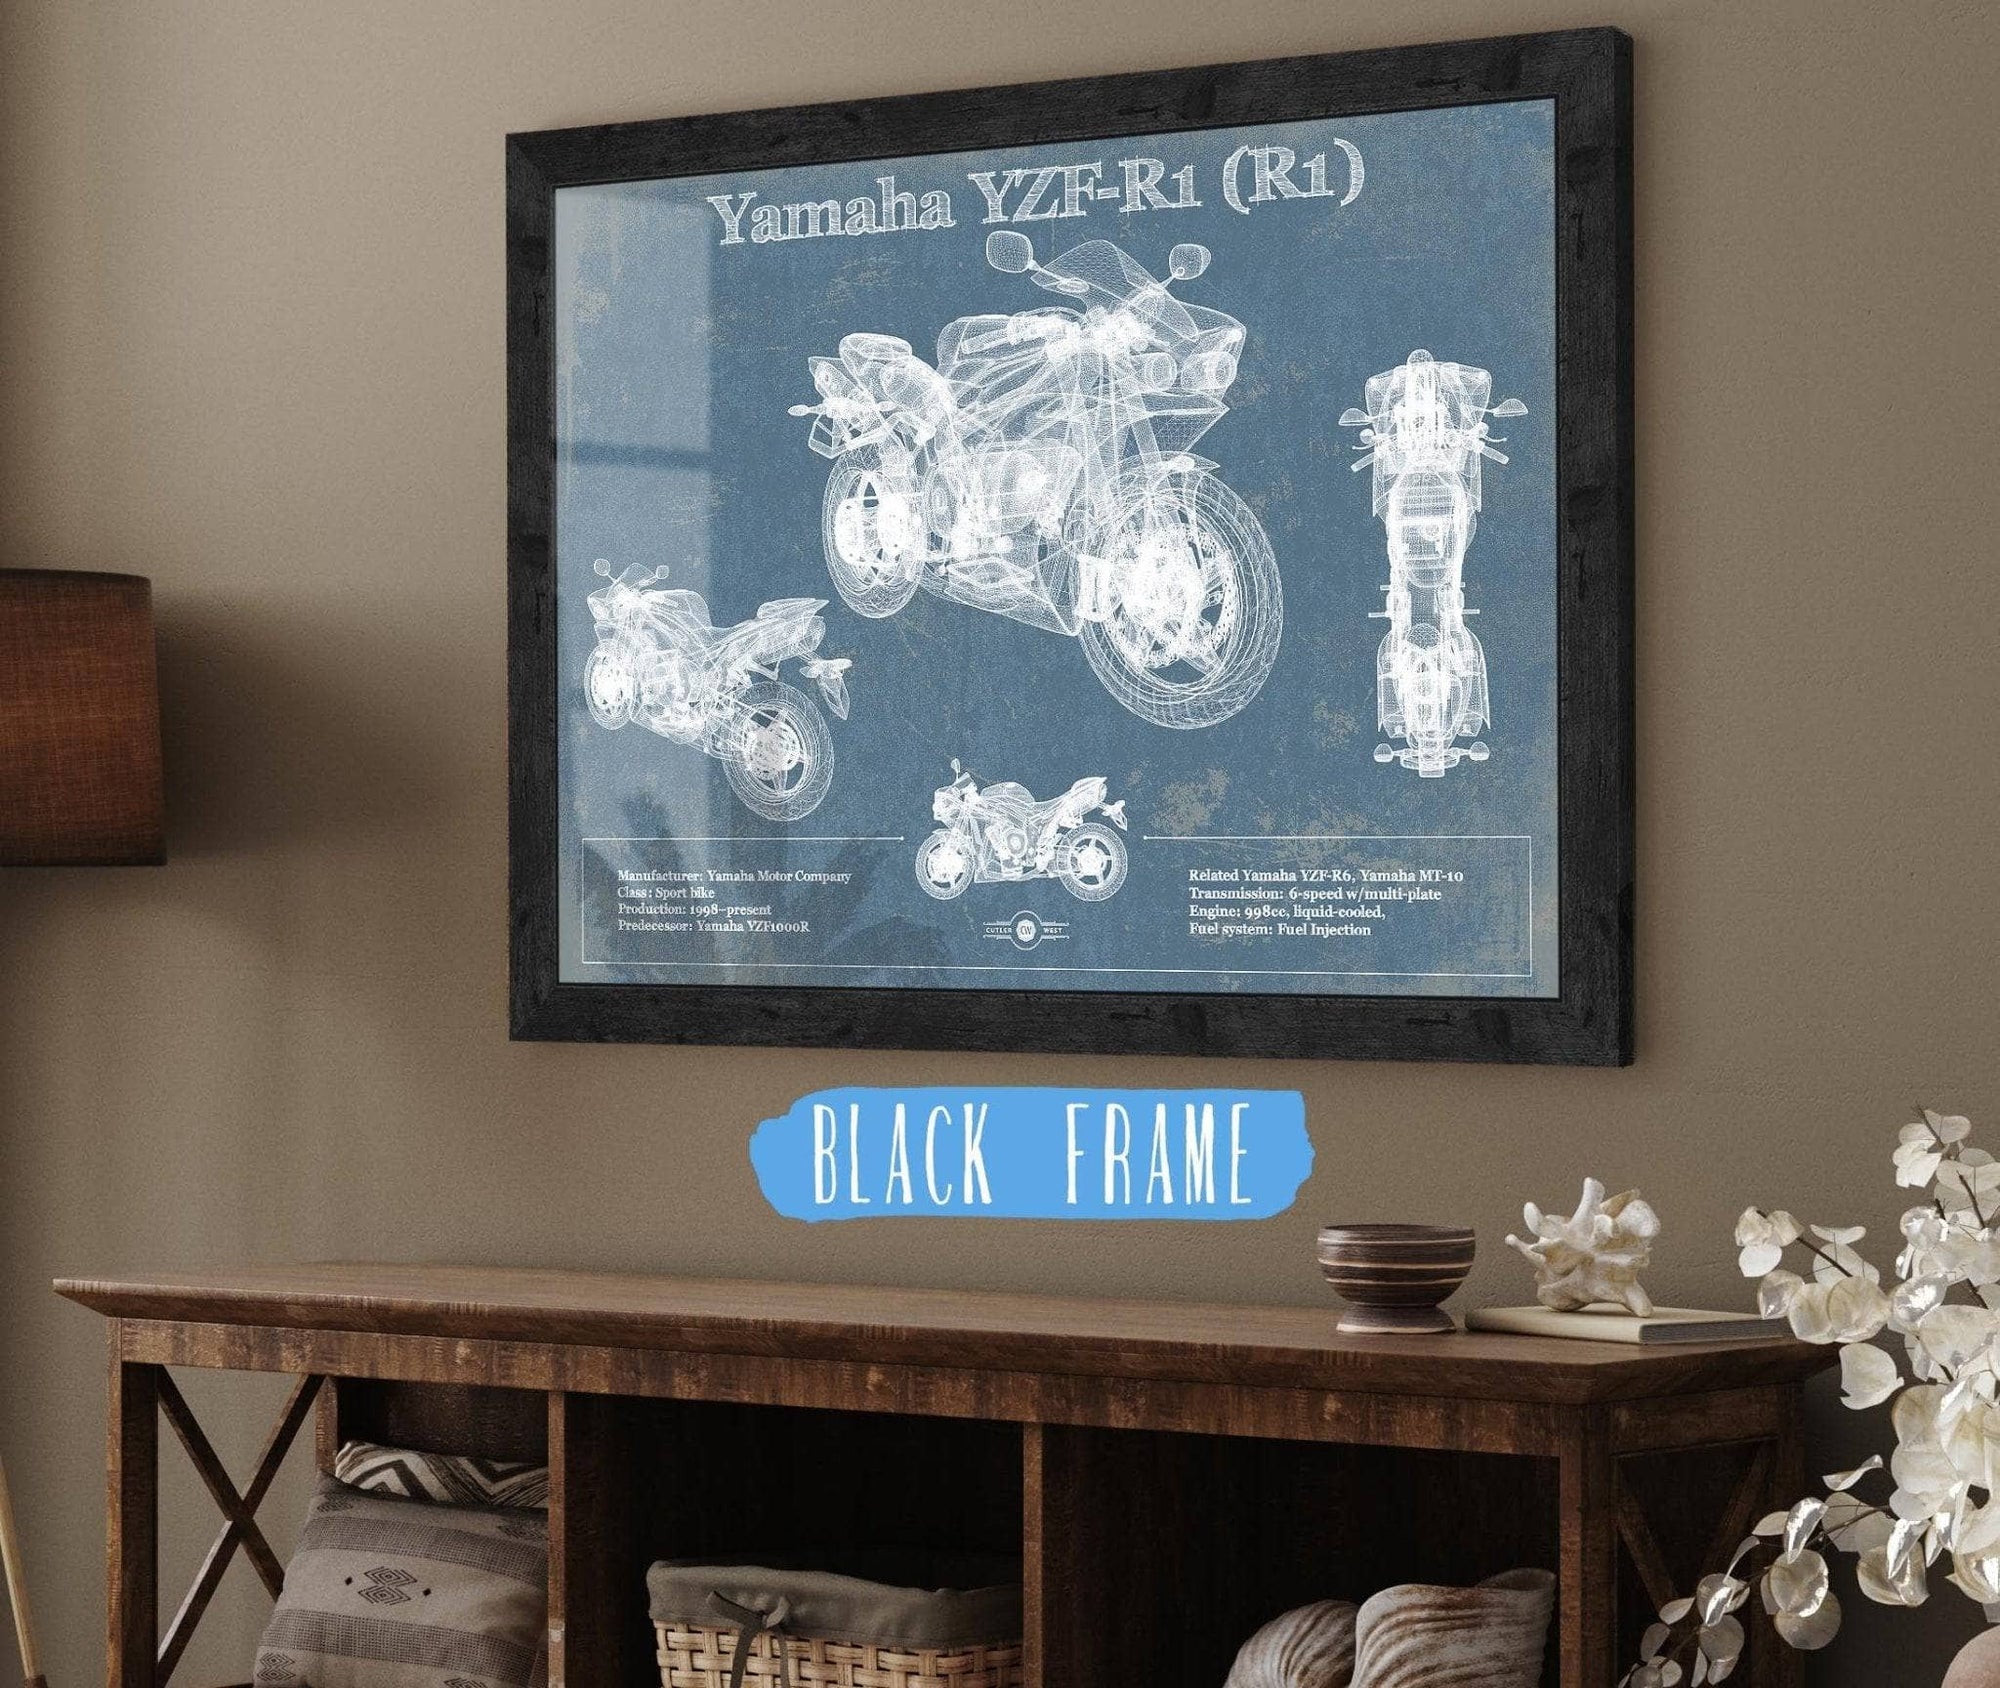 Cutler West 14" x 11" / Black Frame Yamaha YZF-R1 (R1) Blueprint Motorcycle Patent Print 888114587-14"-x-11"5276